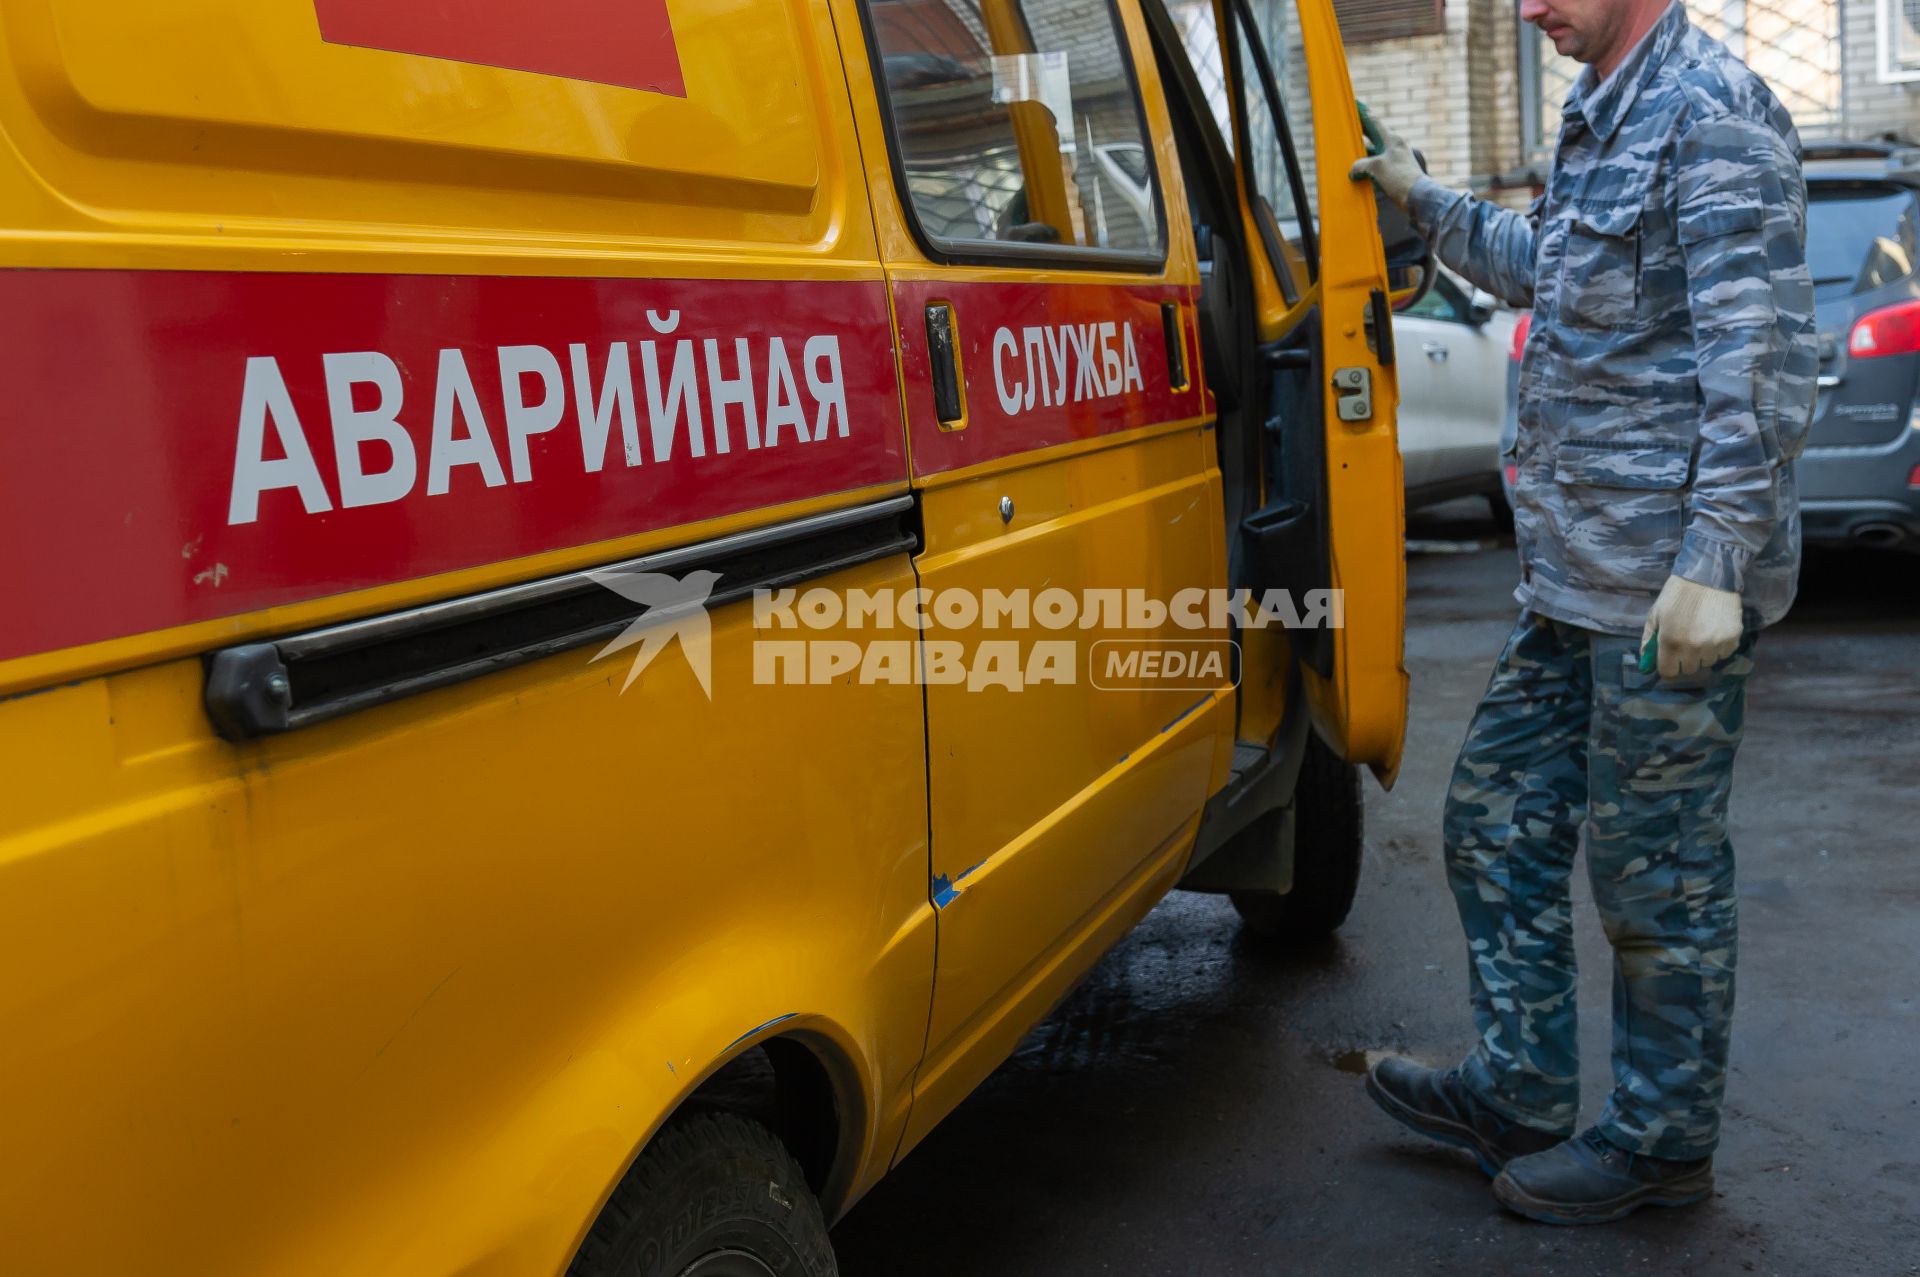 Санкт-Петербург. Машина аварийной службы ЖКХ во дворе дома.